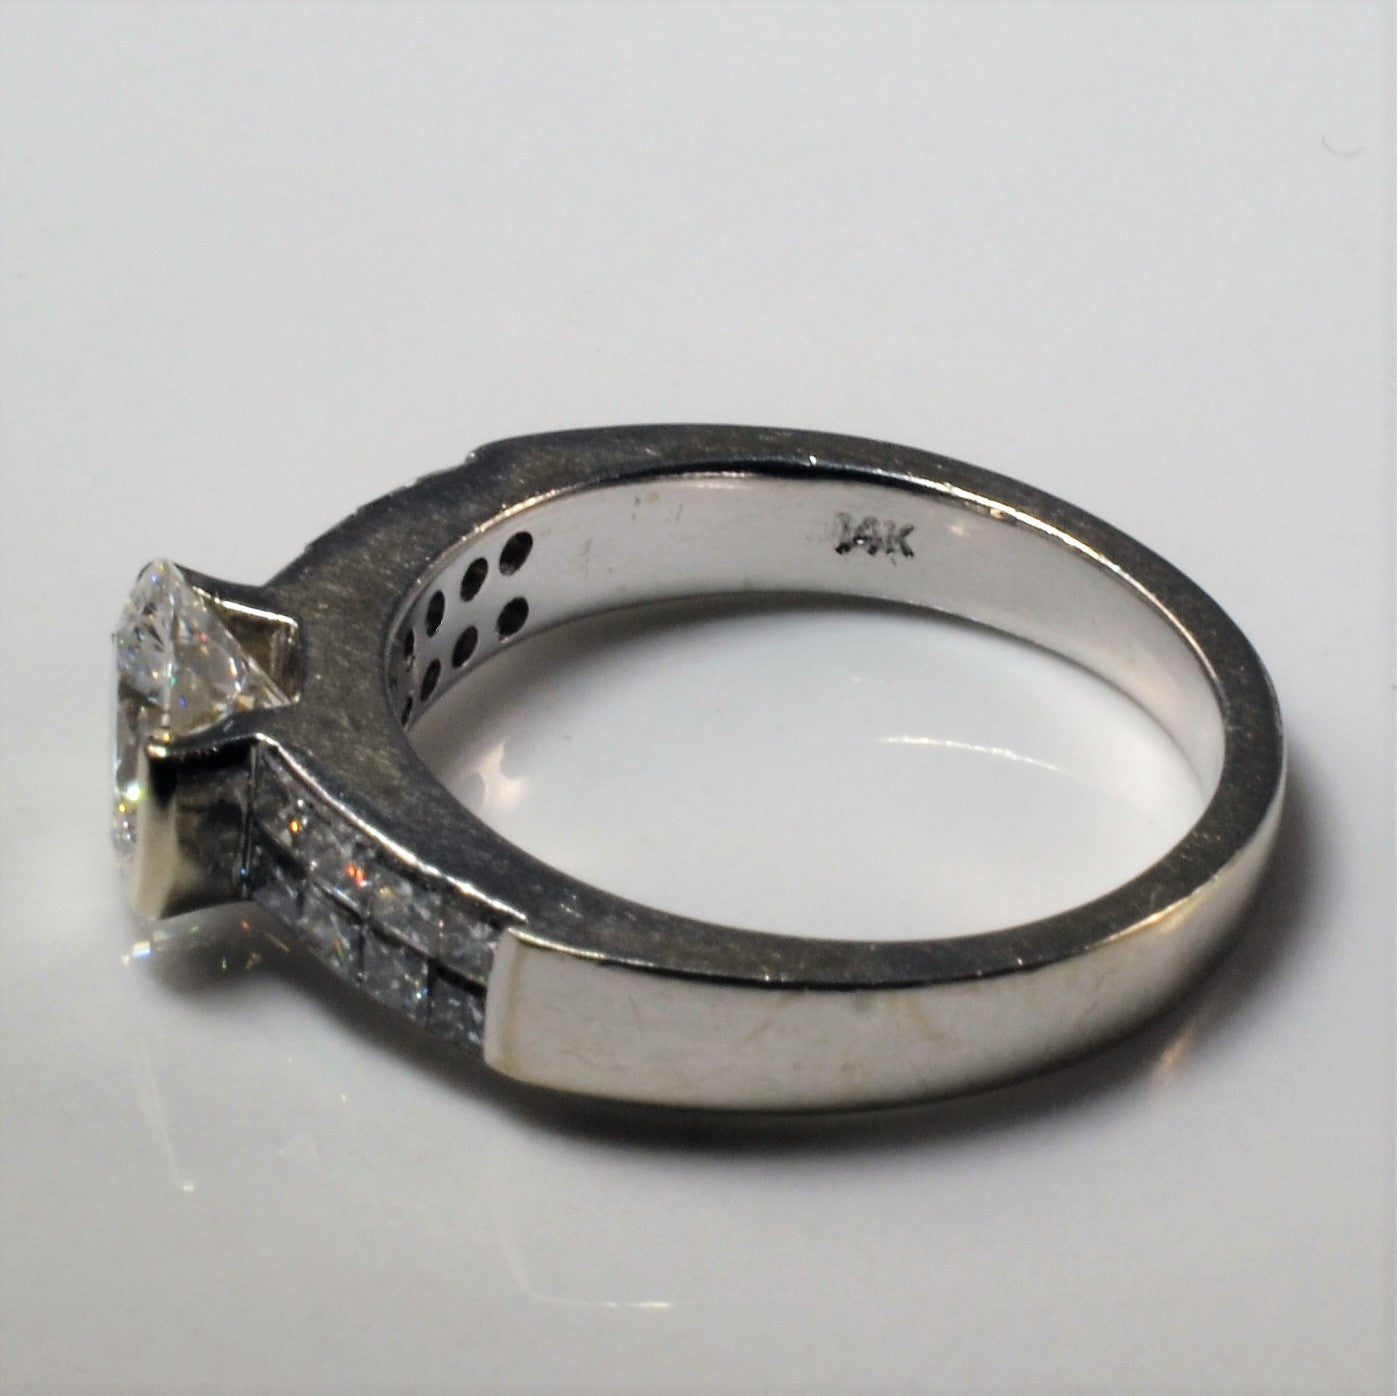 Princess Pave Semi Bezel Engagement Ring | 1.75ctw | SZ 6 |